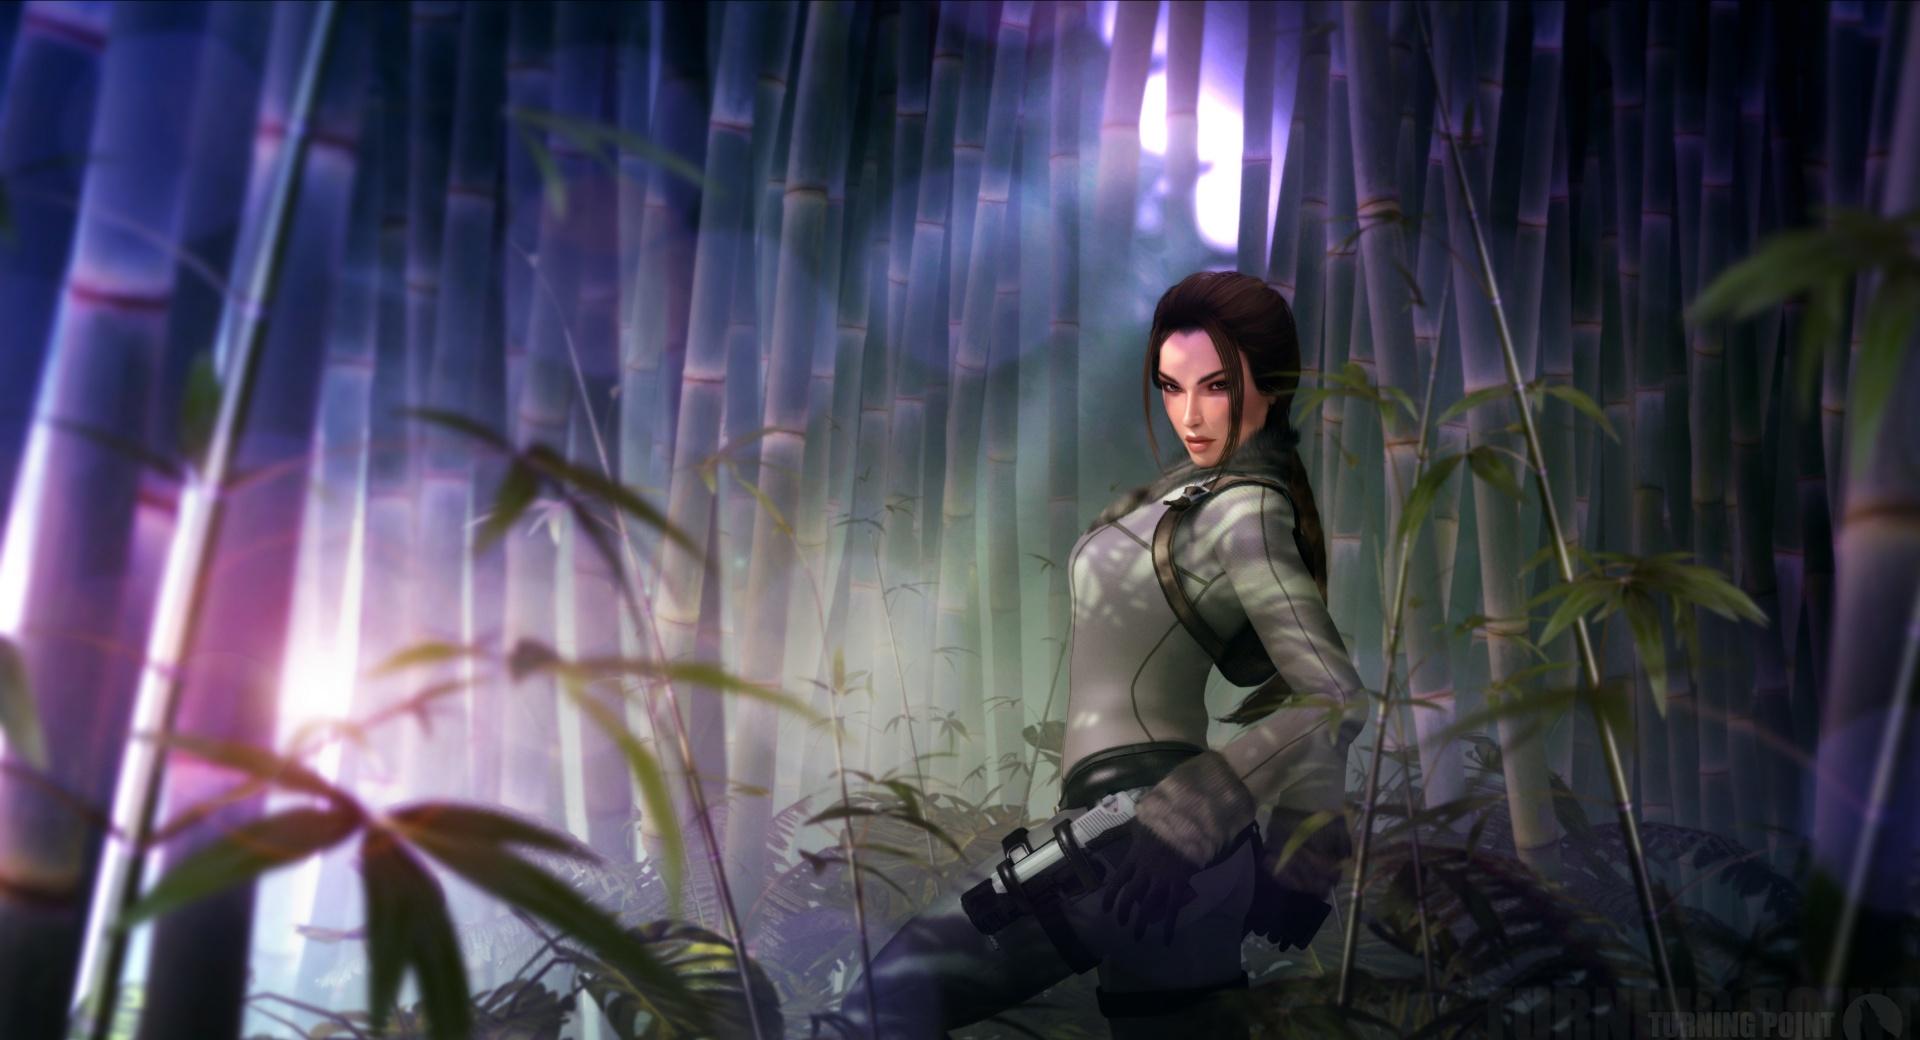 Lara Croft FanArt at 1024 x 768 size wallpapers HD quality